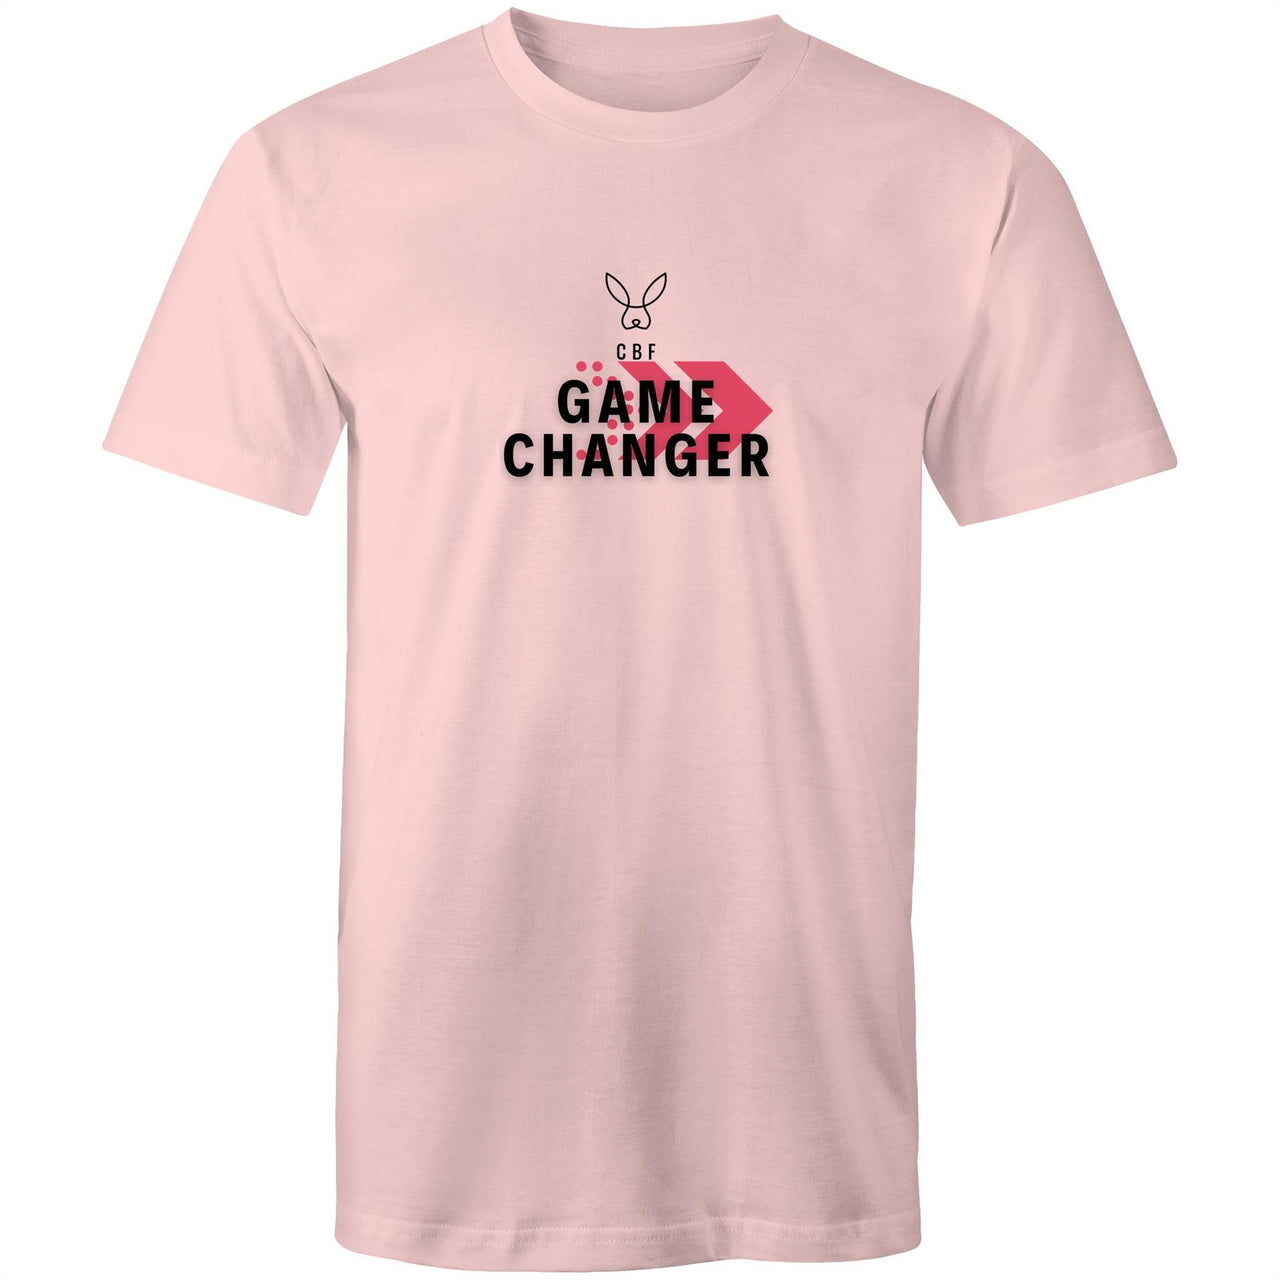 CBF Game Changer Unisex Mens Womens Crew T-Shirt pink by CBF Clothing